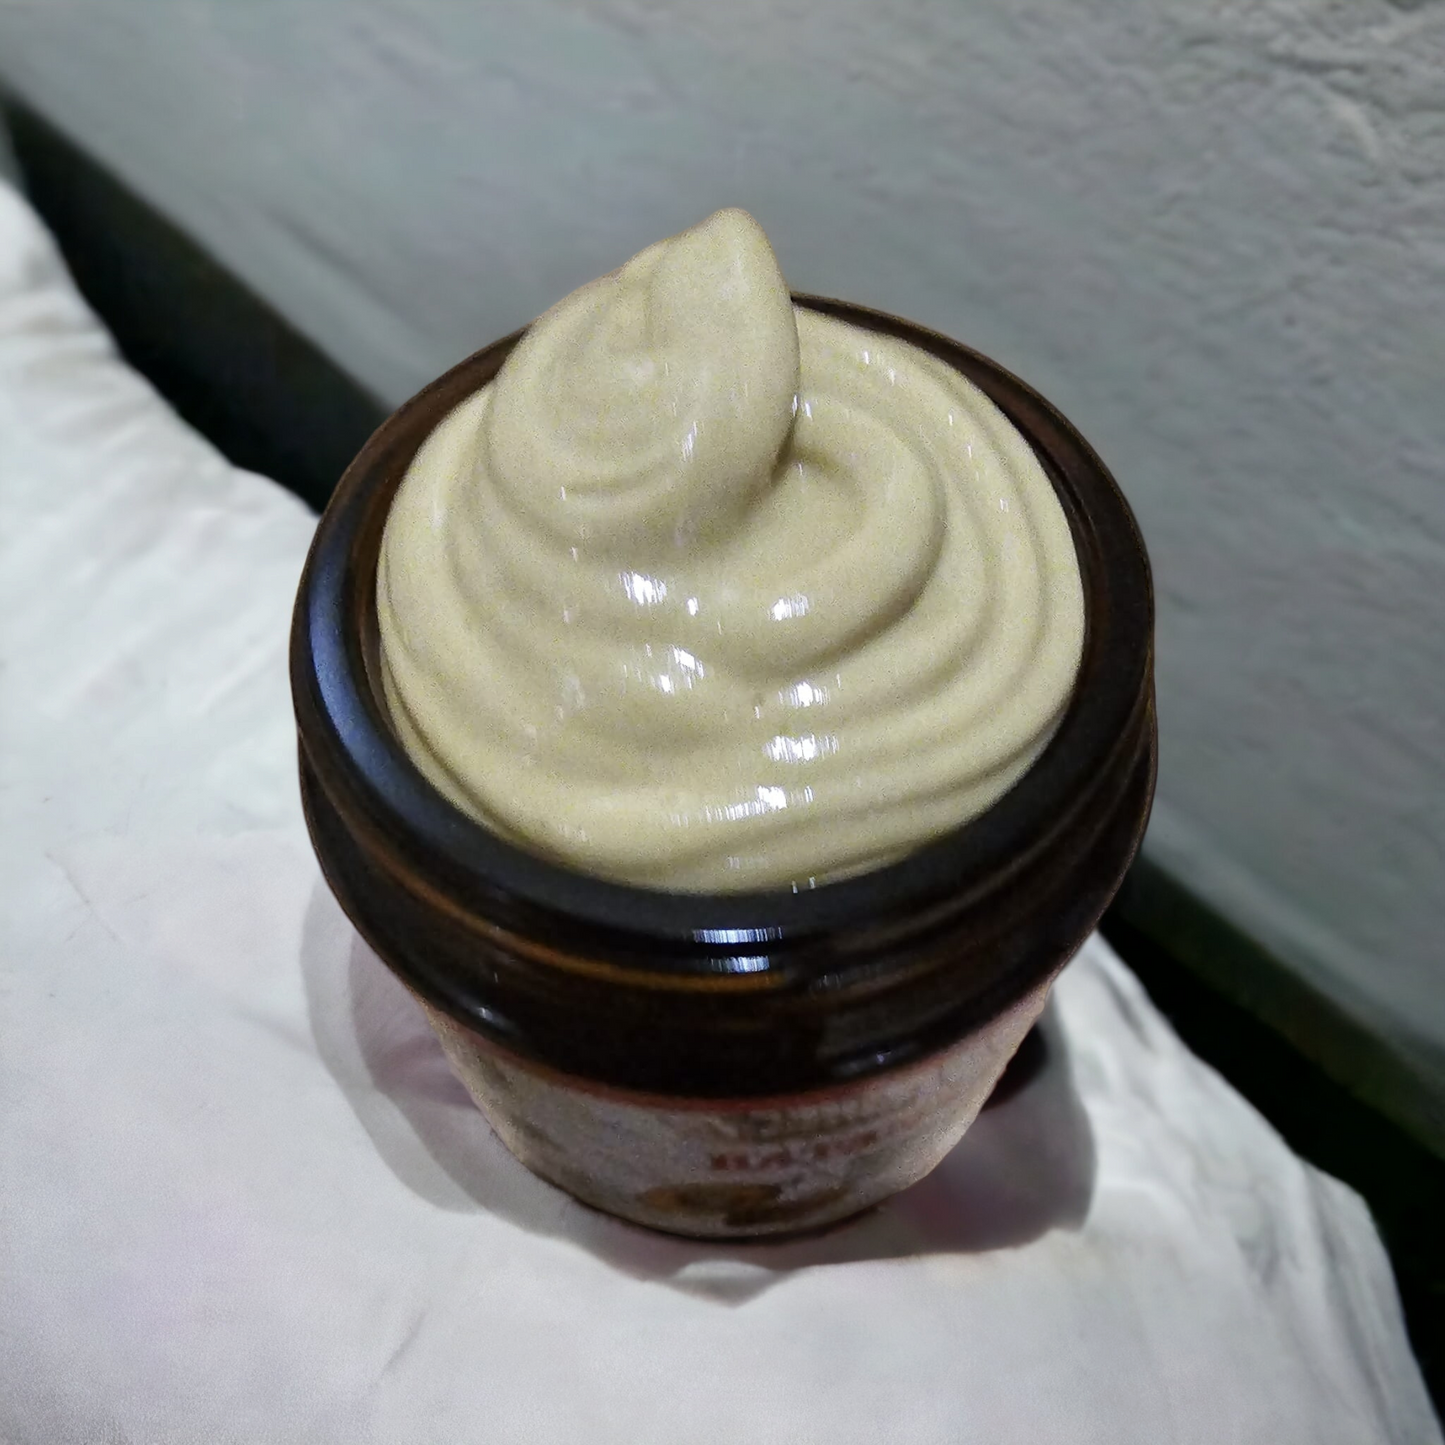 BATANA Oil Butter for Hair Growth - Natural & Organic, Miraculous Natural Oil for Hair, Prevents Hair Loss, Eliminates Split Ends, Handmade